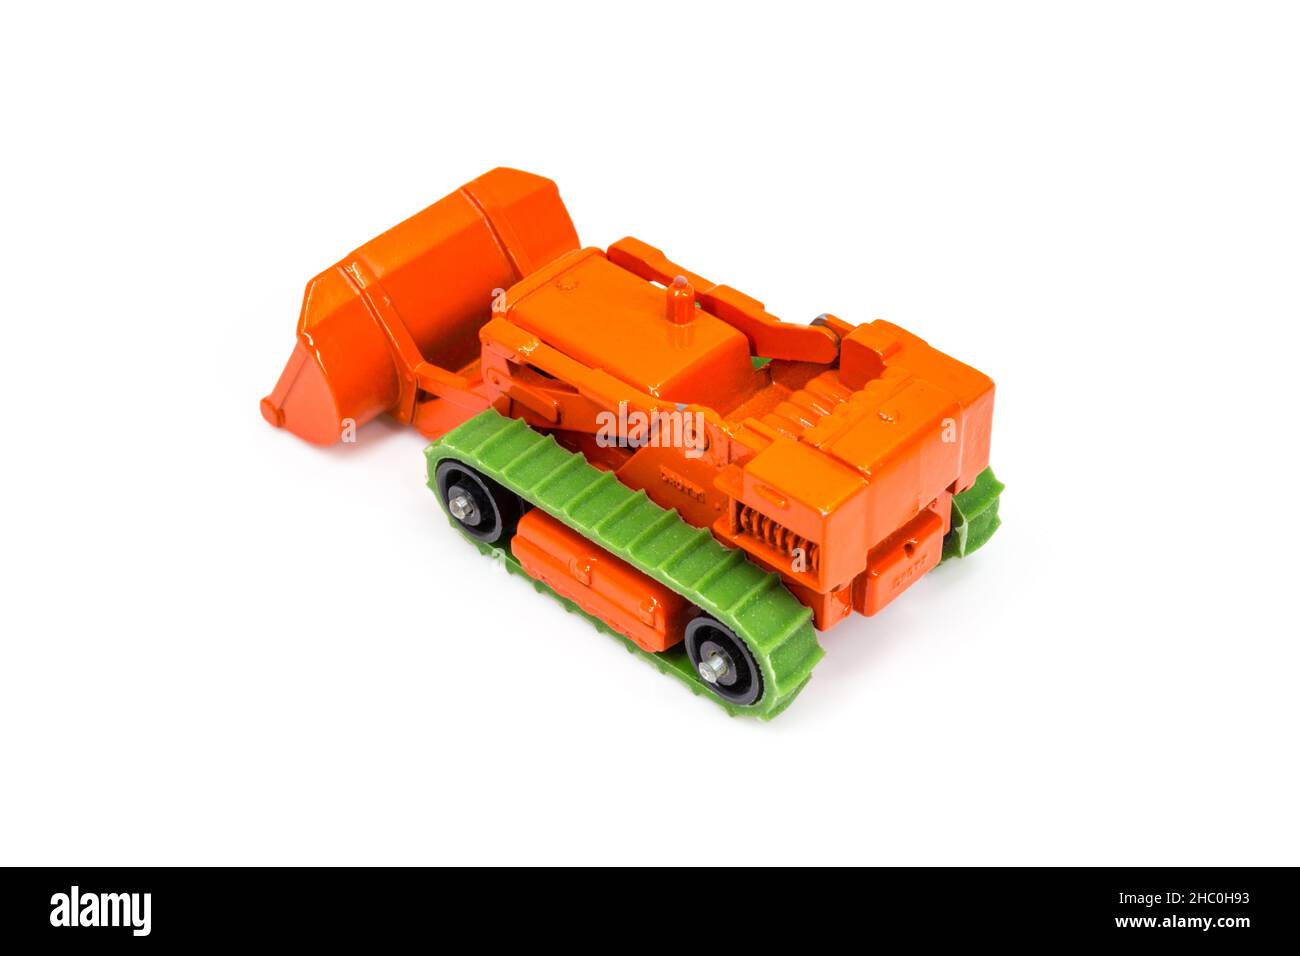 Lesney Products Matchbox model toy car 1-75 series no. 58 Drott Excavator Stock Photo